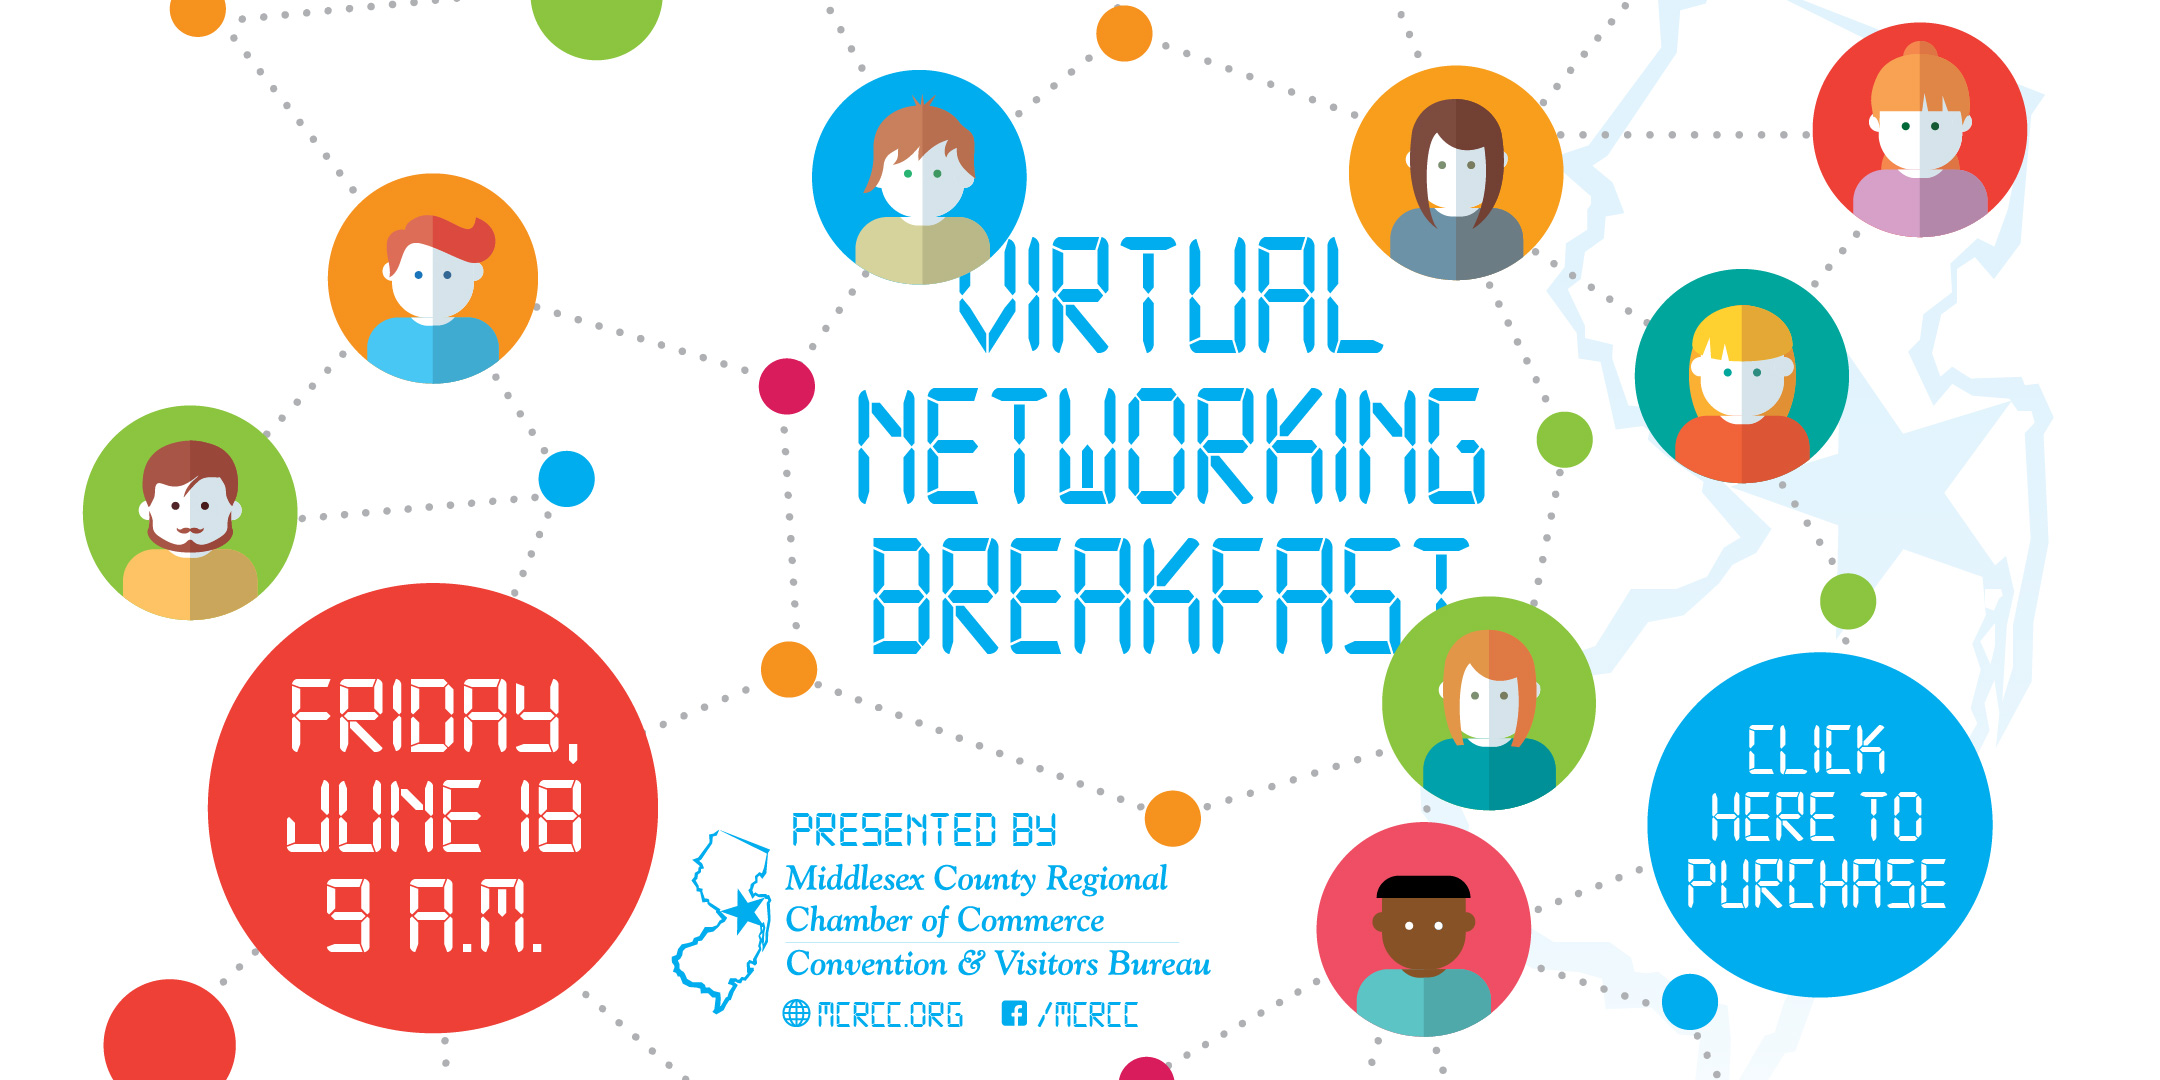 June 18th Virtual Networking Breakfast